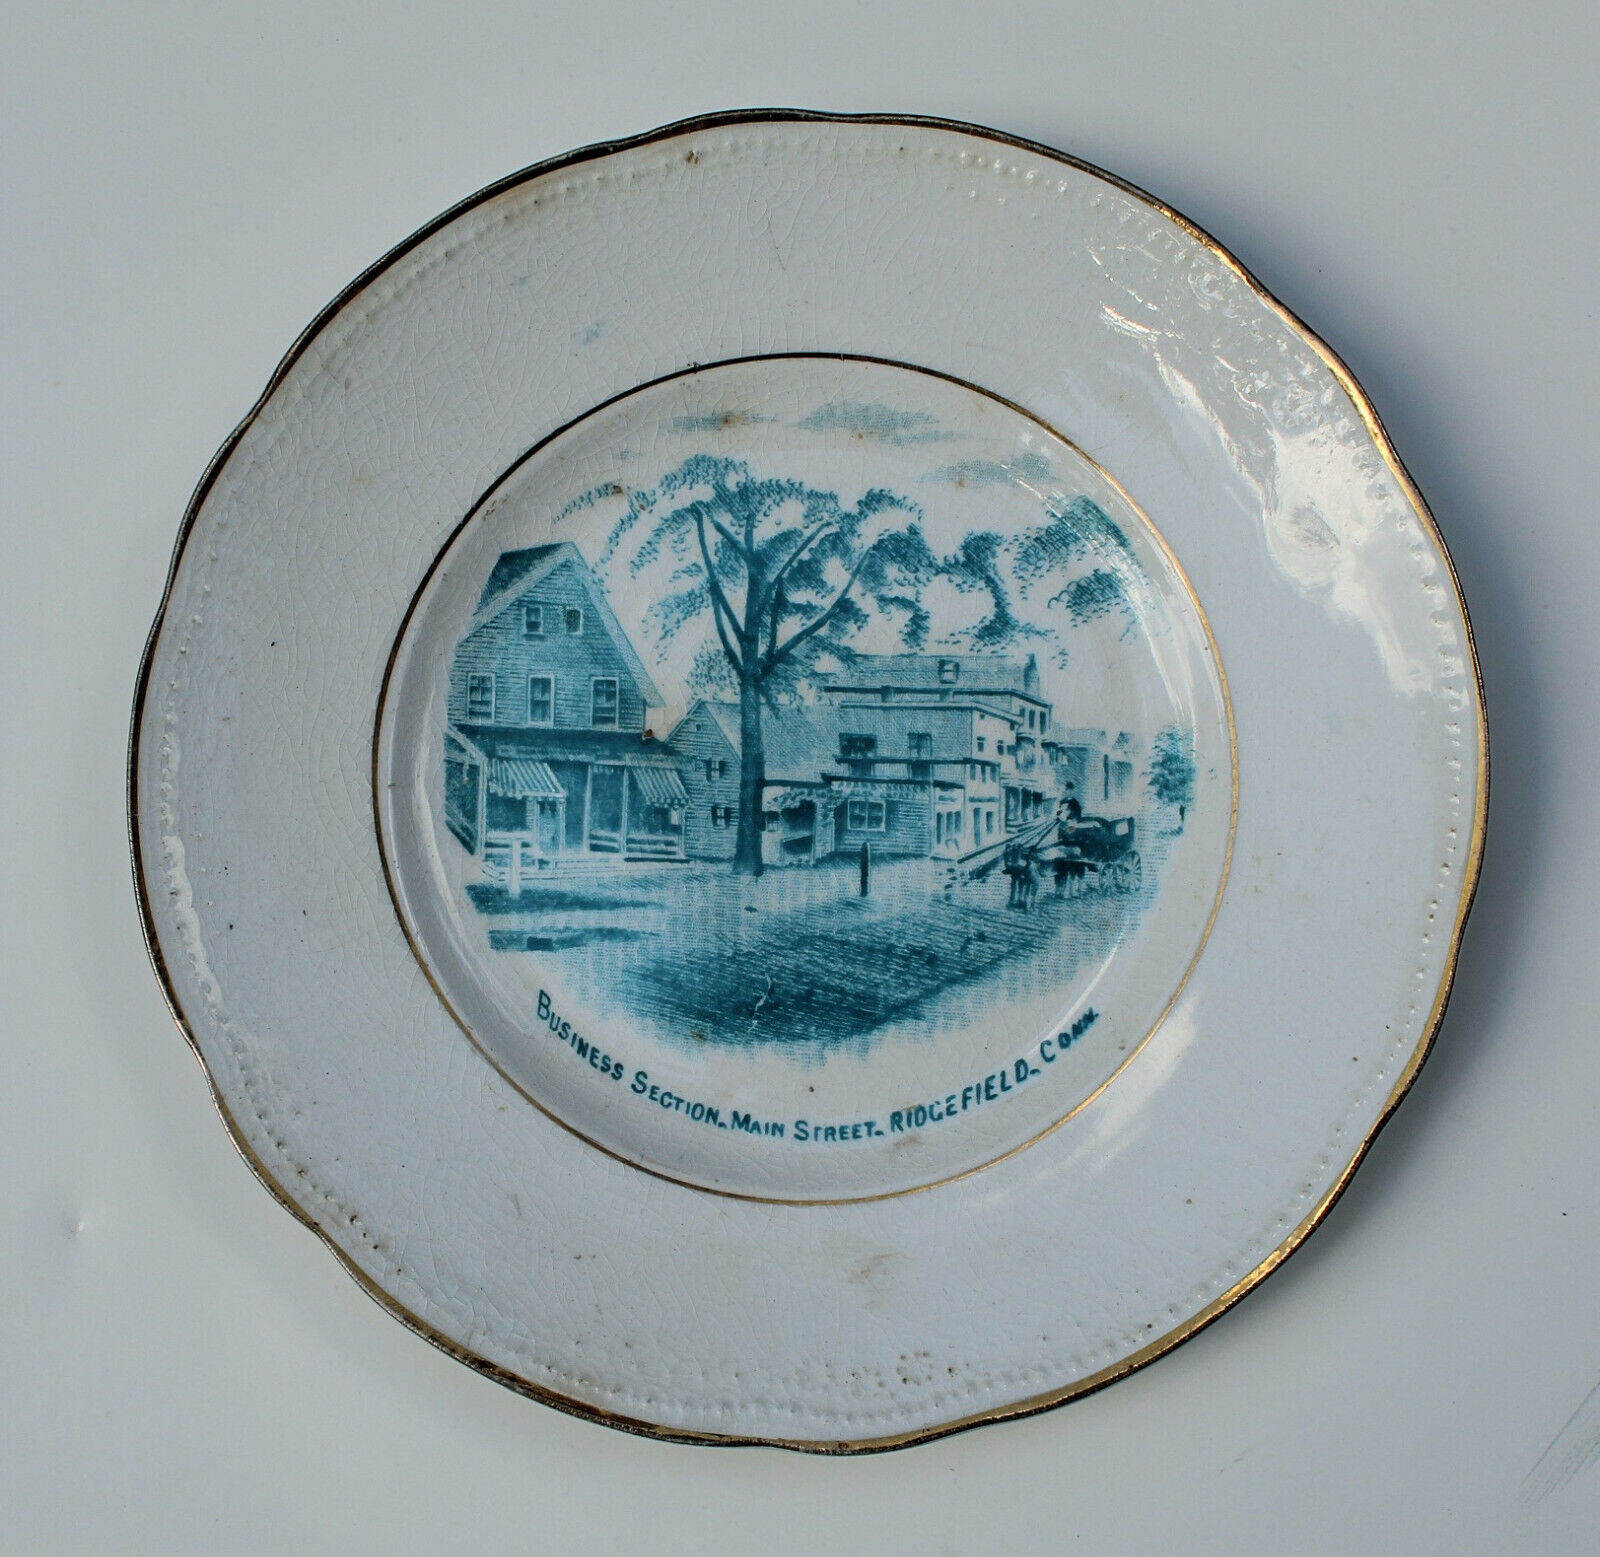 Ridgefield, Conn, Business Section, Main Street, Antique Souvenir Plate, Rare